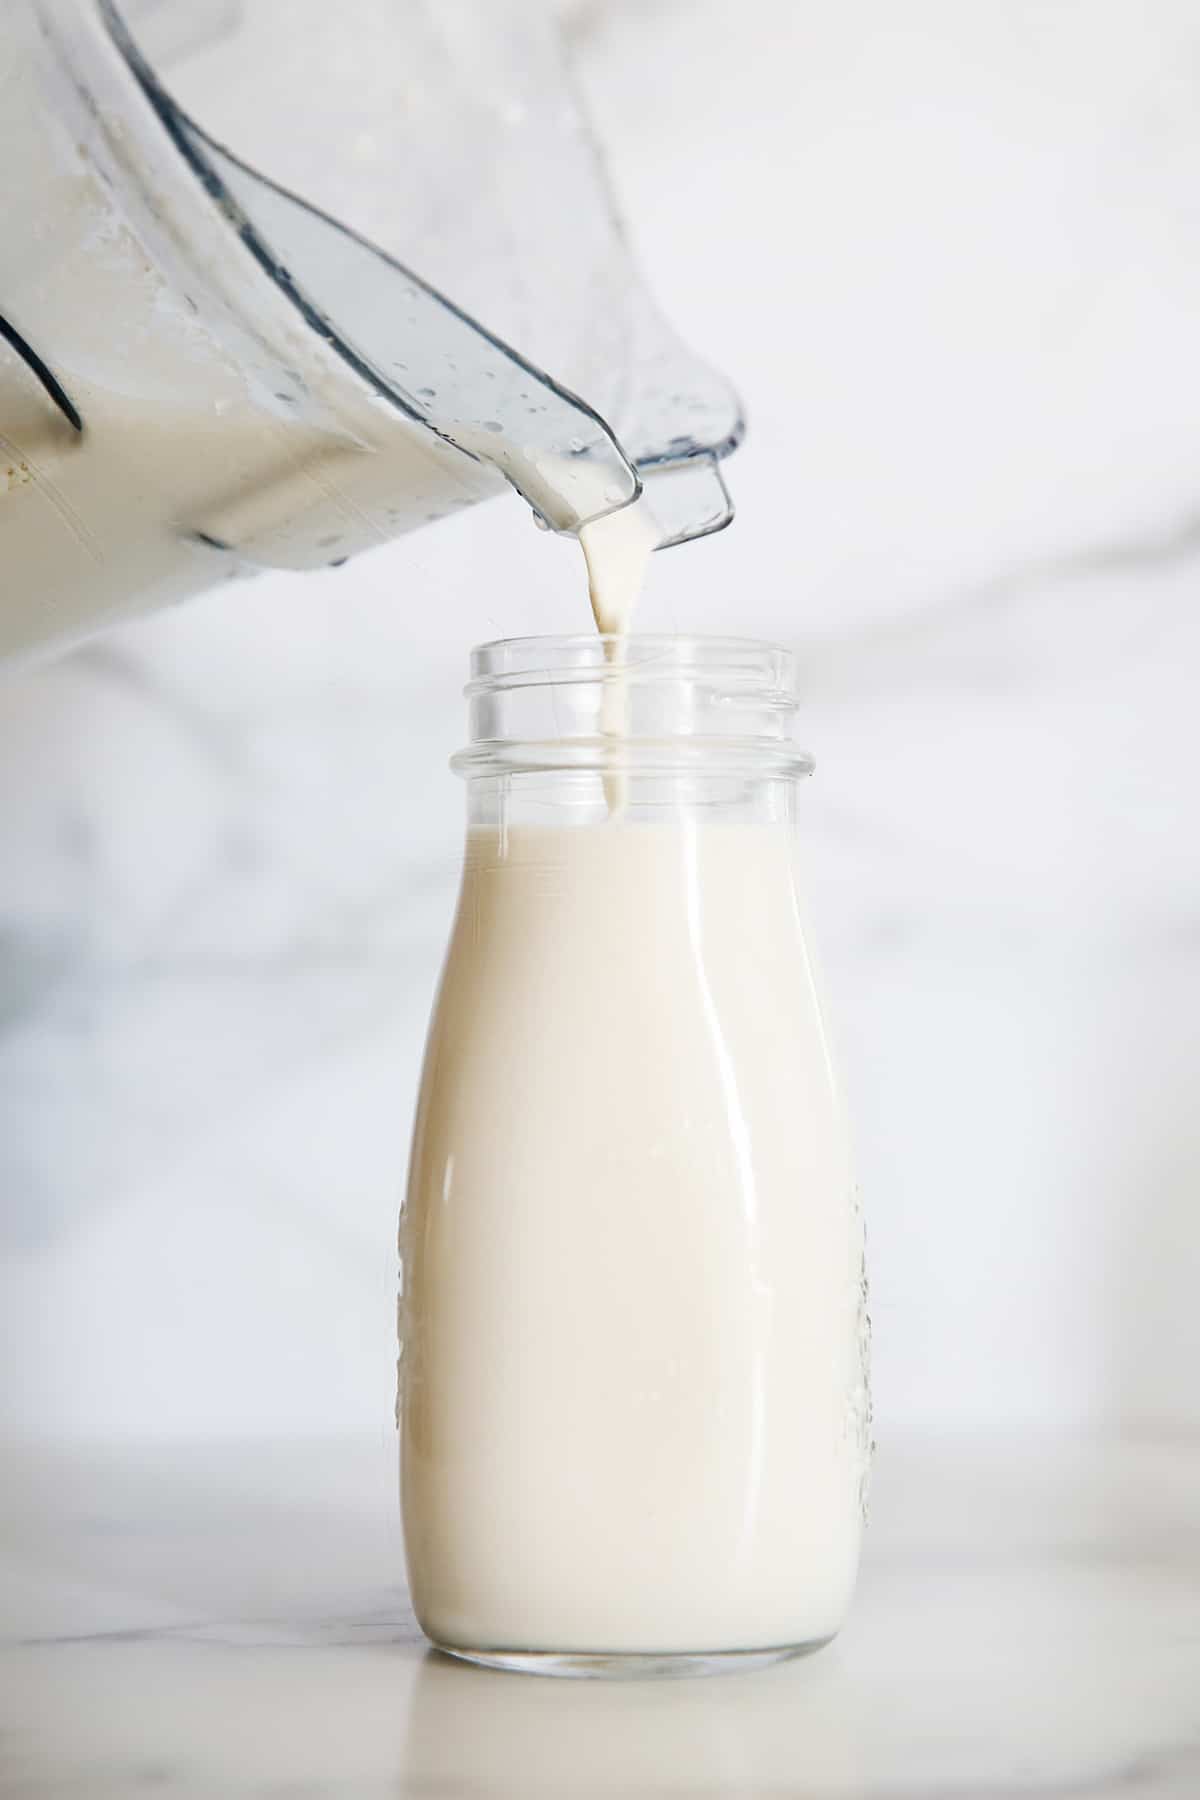 How to Make Cashew Milk